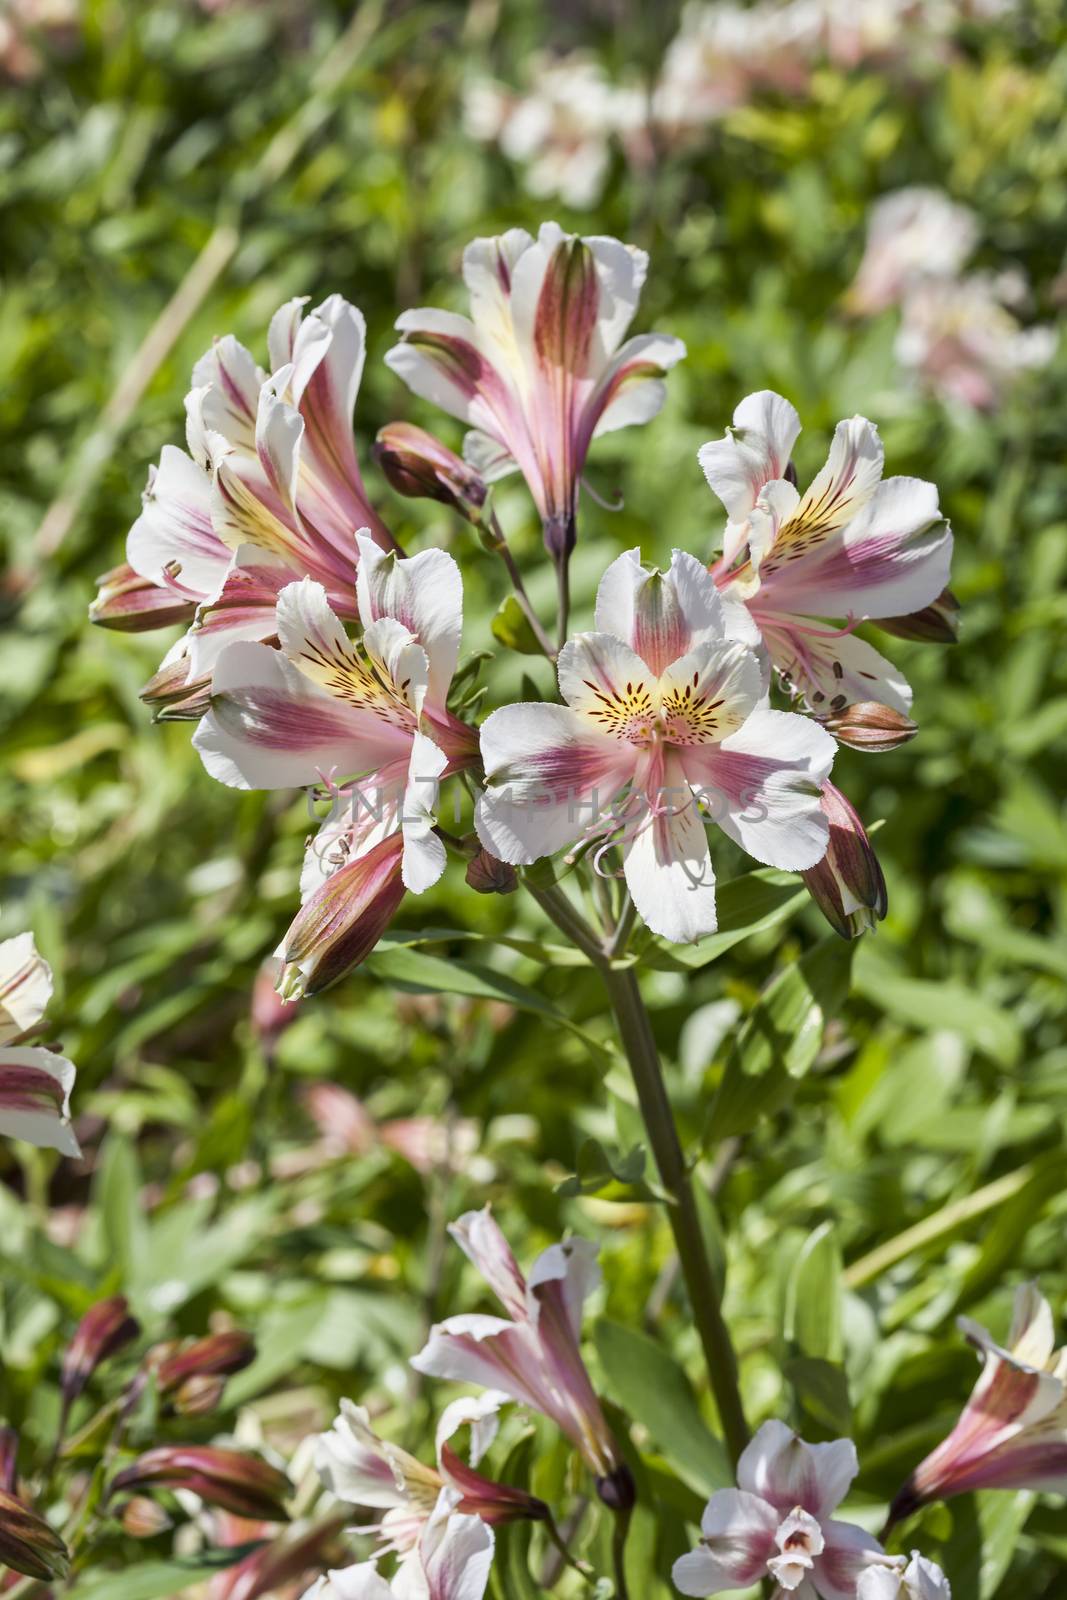 Alstroemeria 'Blushing Bride' also known as Peruvian Lily